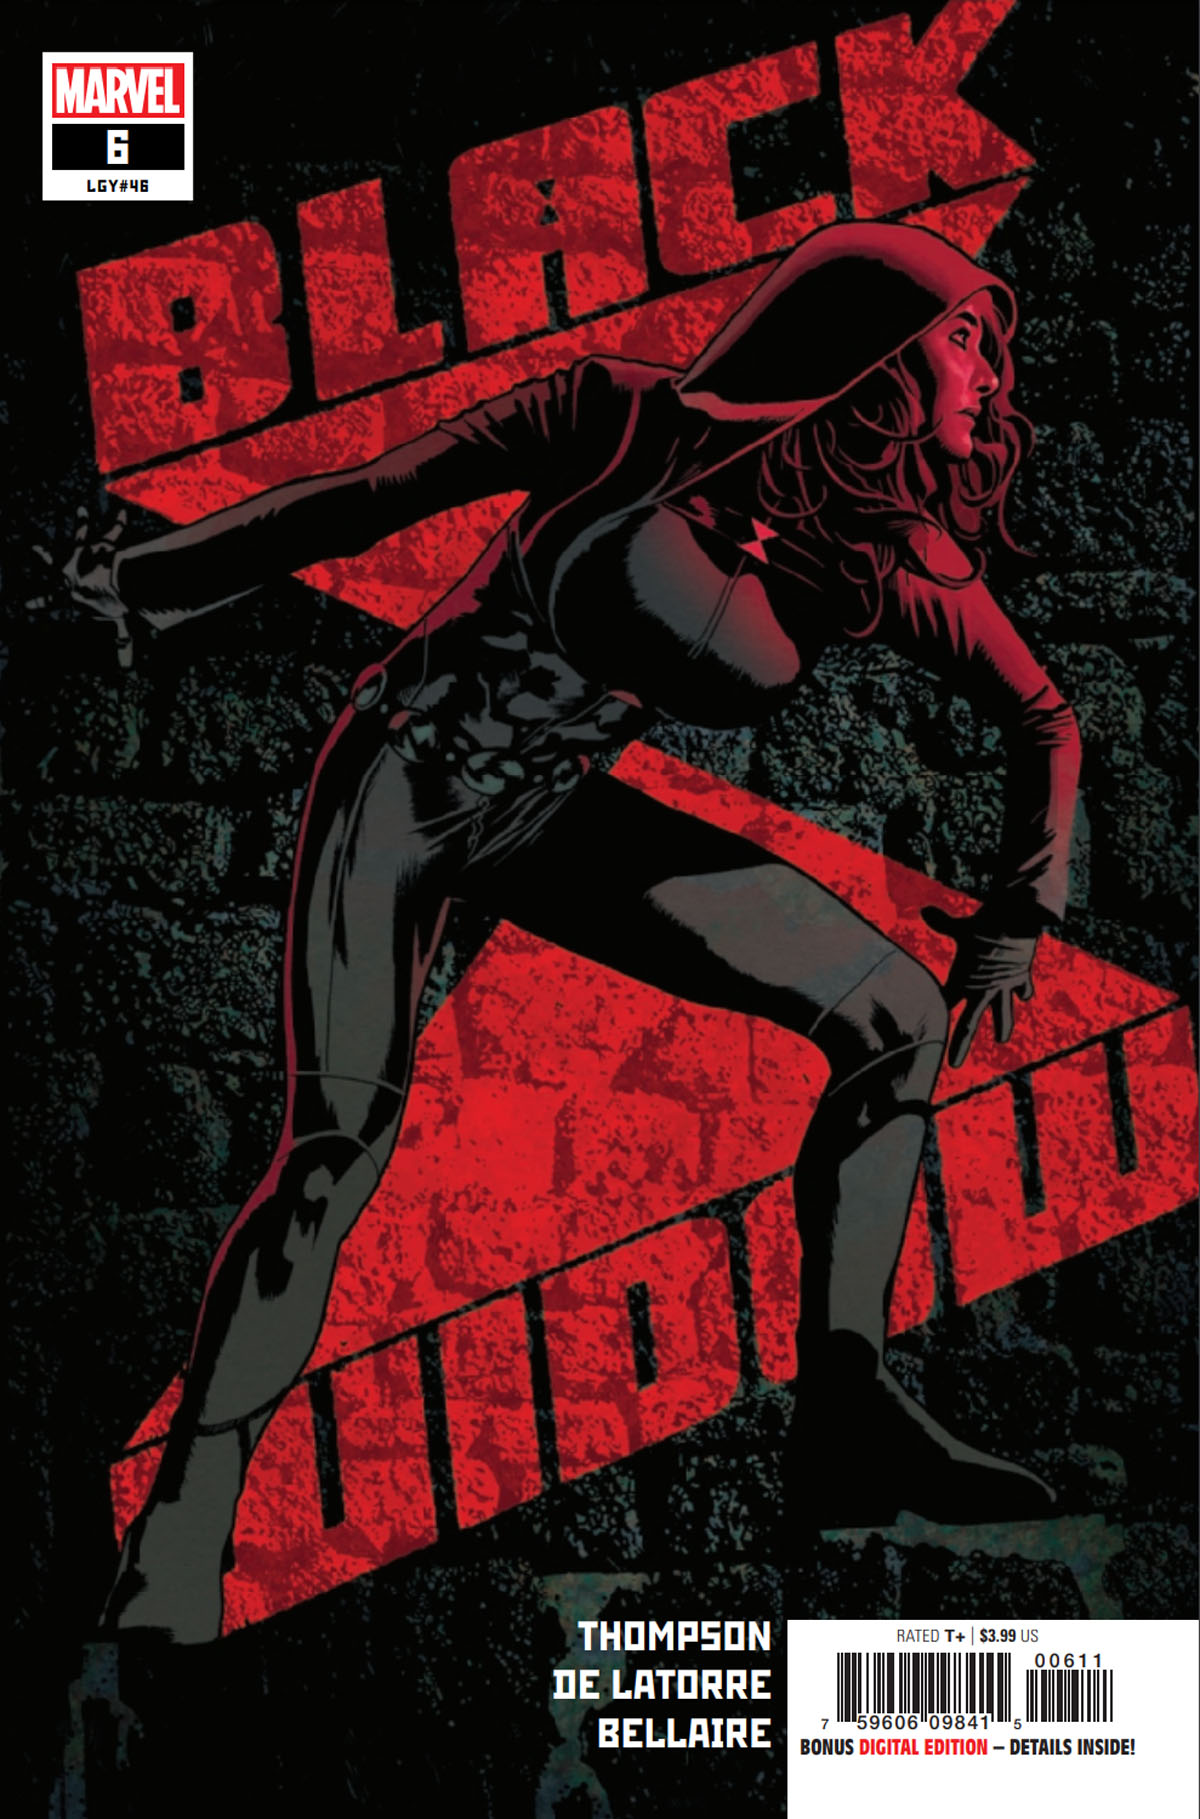 Black Widow #6 cover